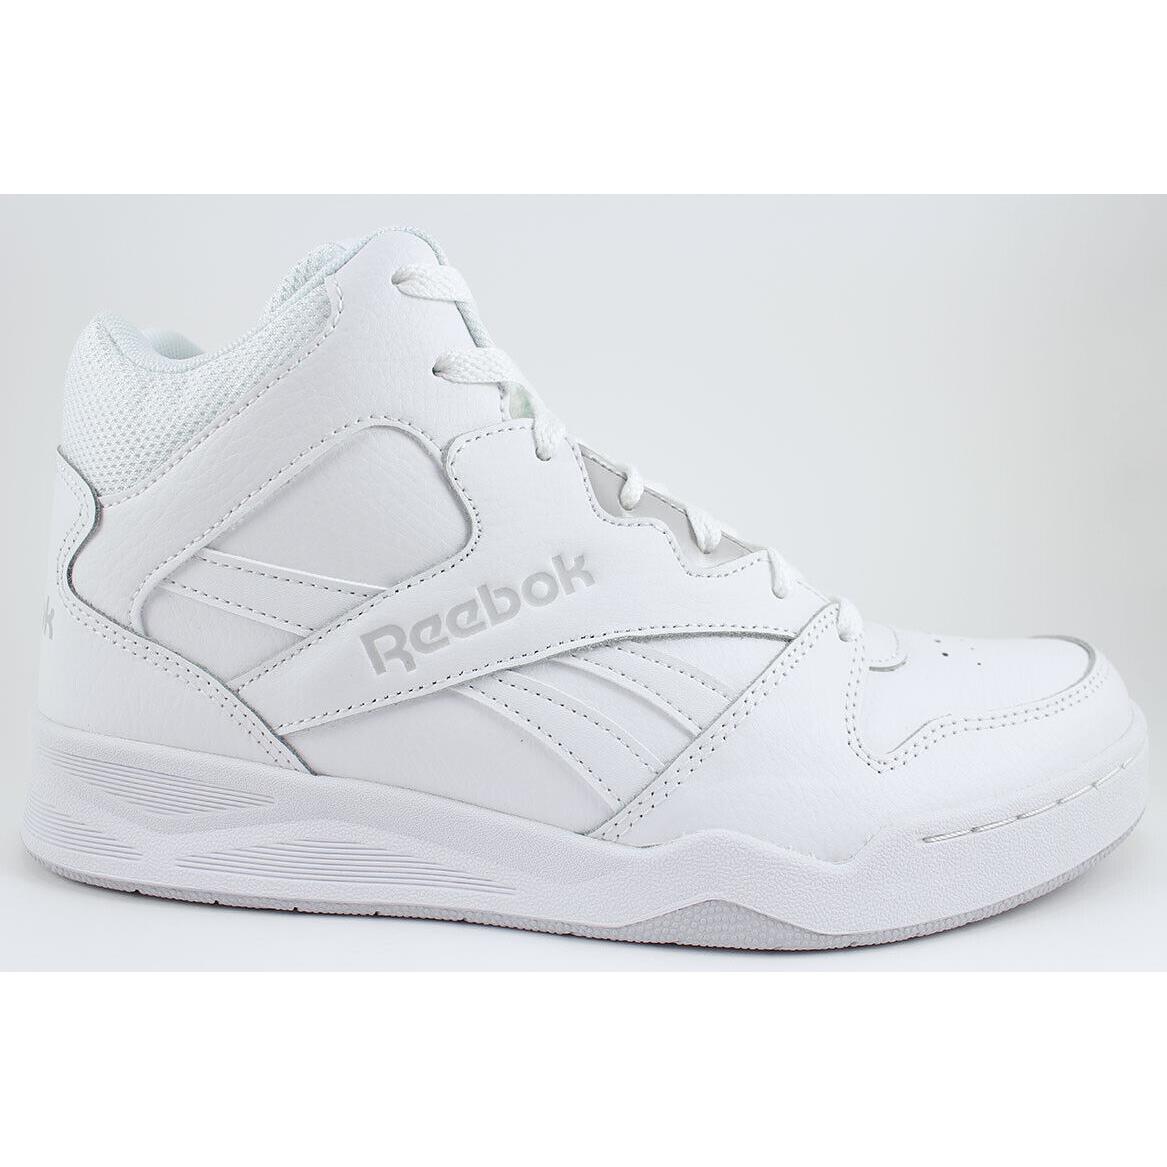 Reebok shoes Royal - White , White/Light Solid Gray Full way 0